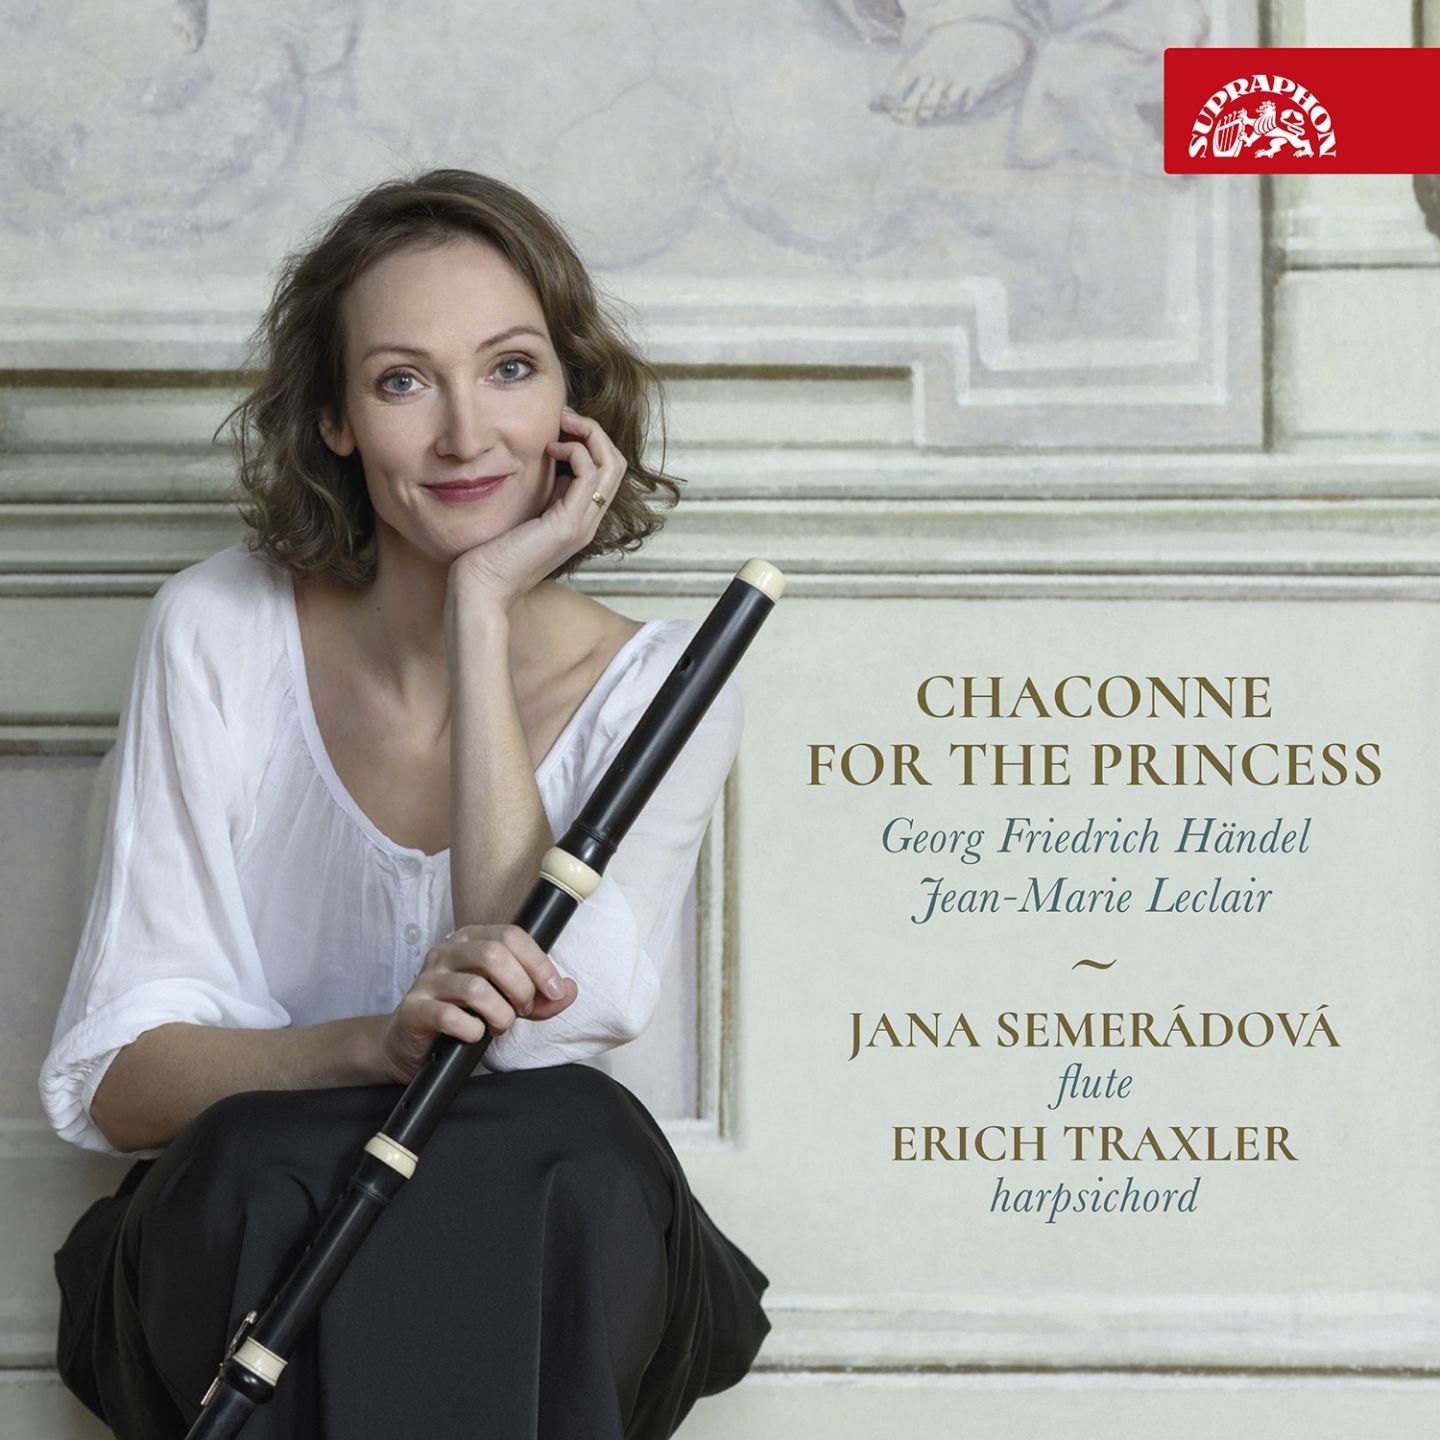 Jana Semeradova, Erich Traxler – Handel, Leclair – Chaconne for the Princess (2020) [FLAC 24bit/96kHz]